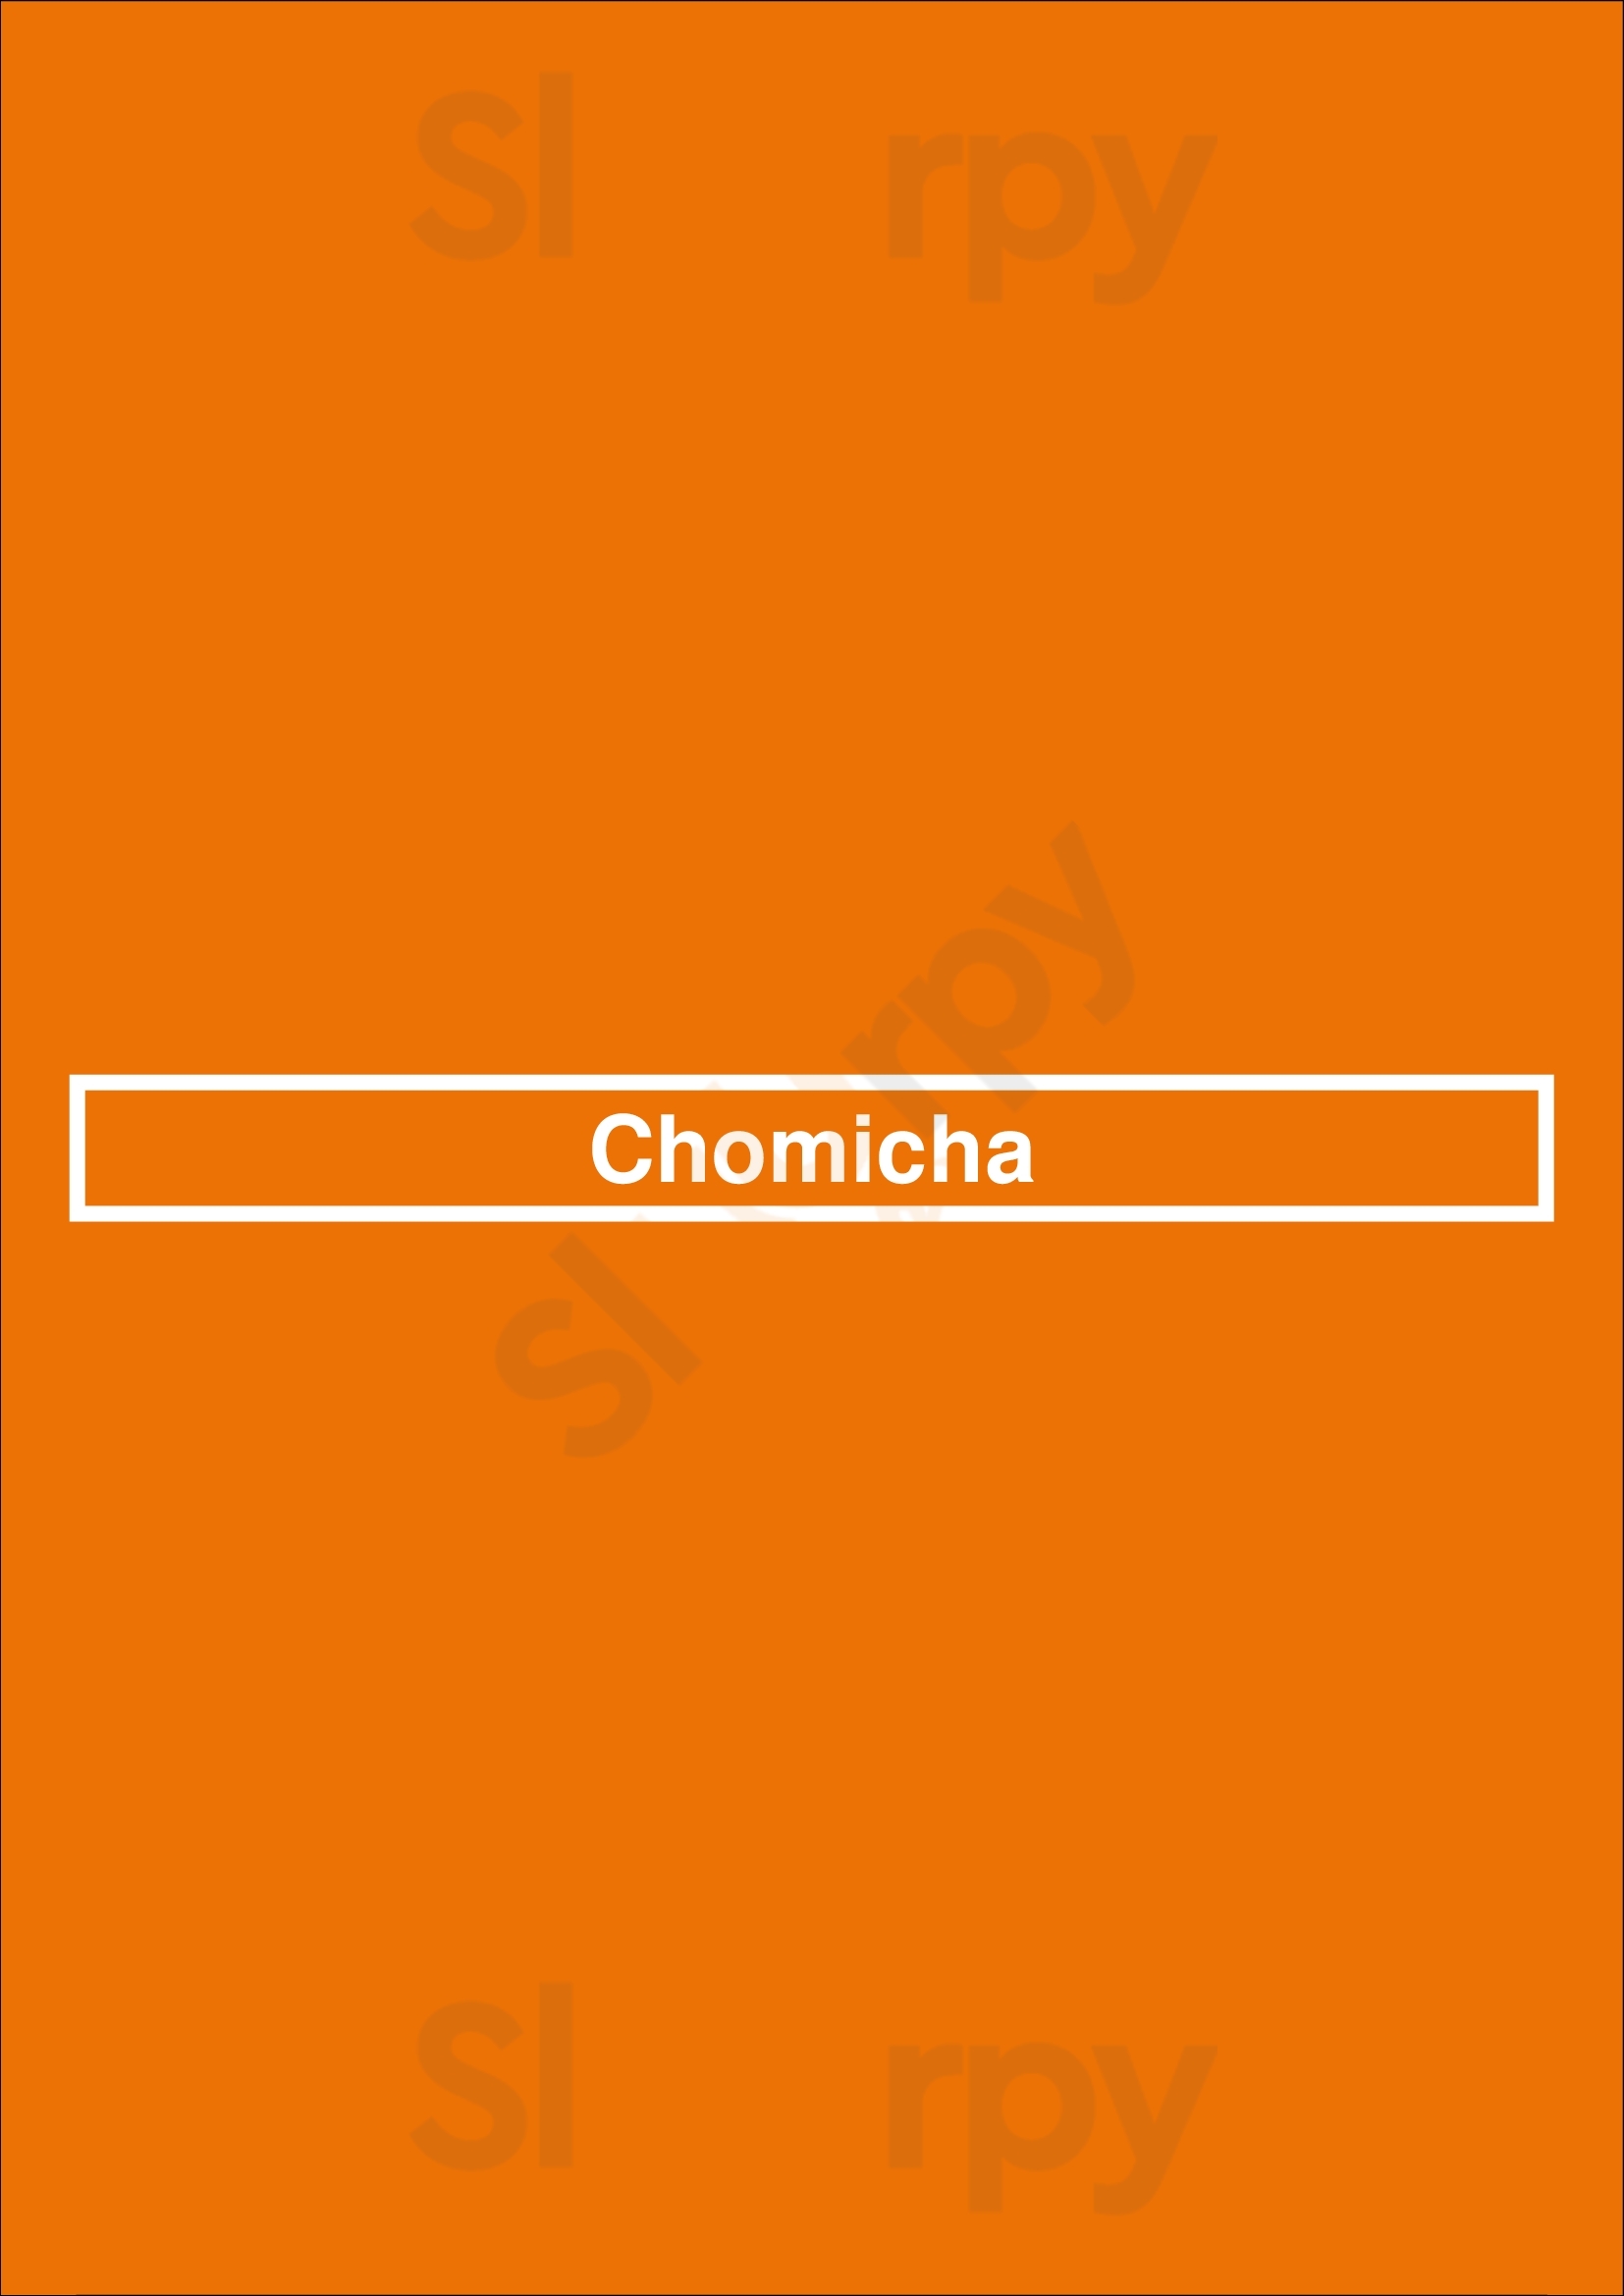 Chomicha Eindhoven Menu - 1